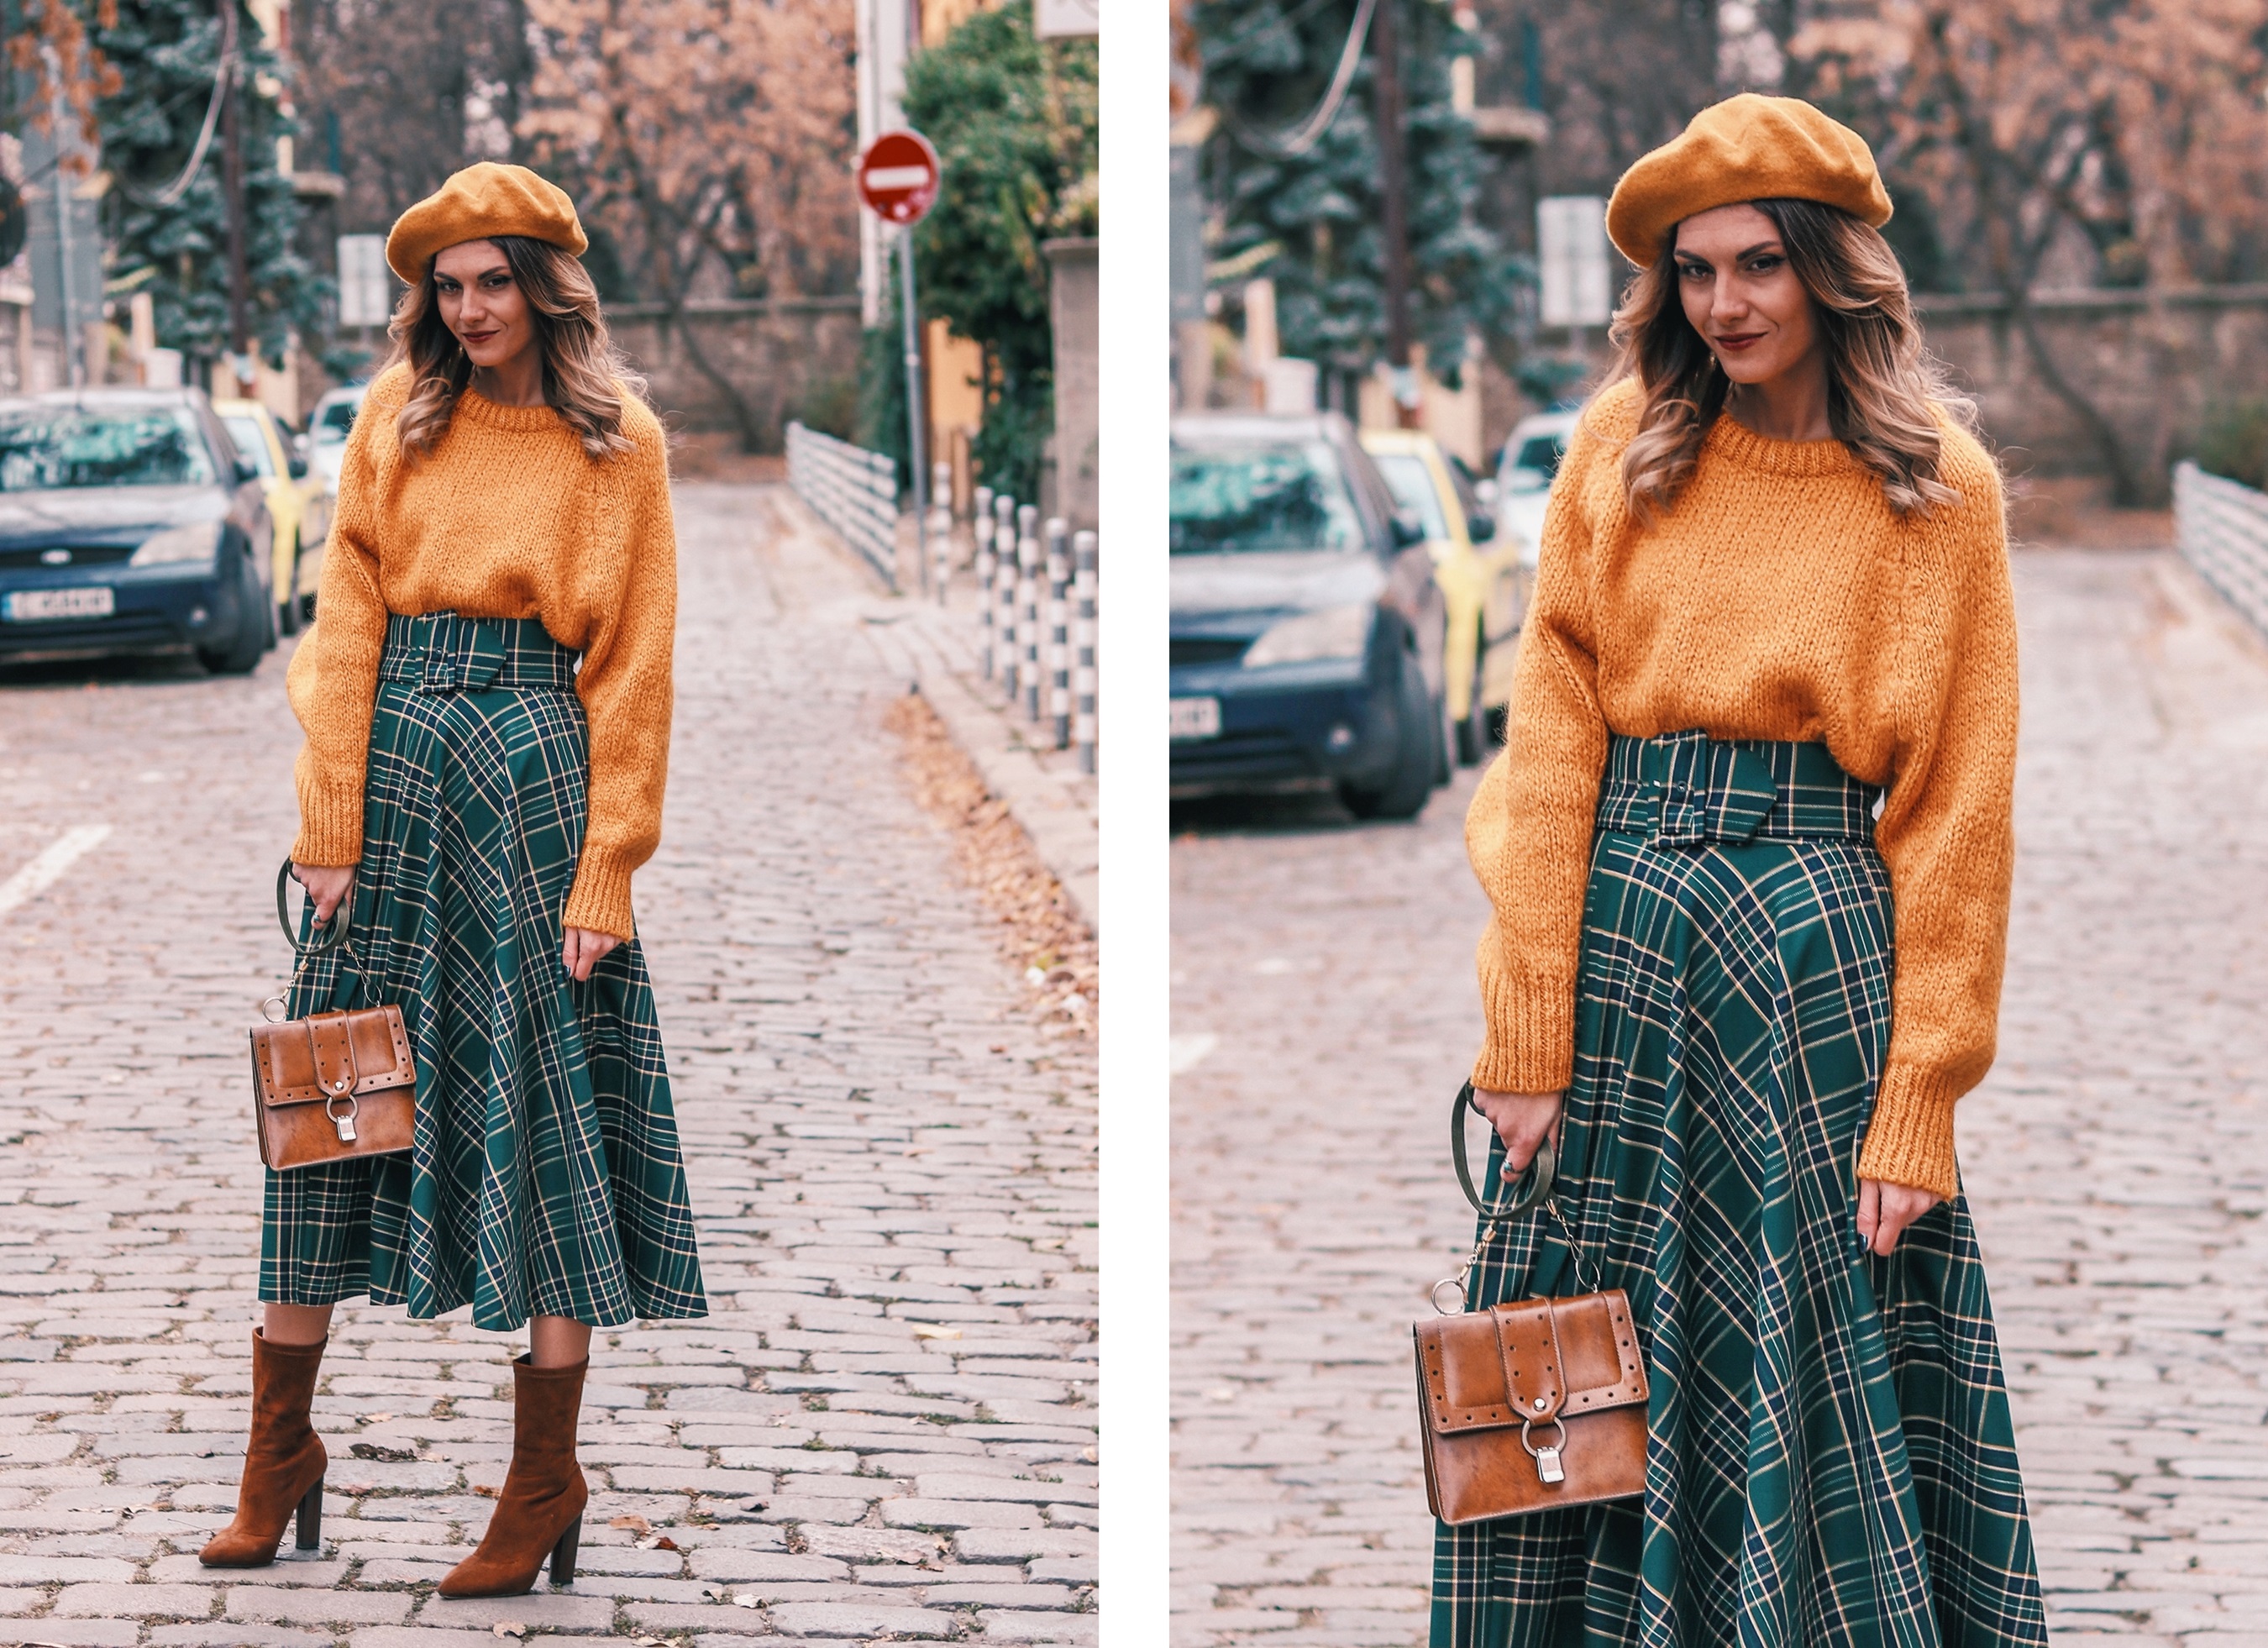 Zara Autumn Winter Outfit Yellow Sweater Plaid Midi Skirt